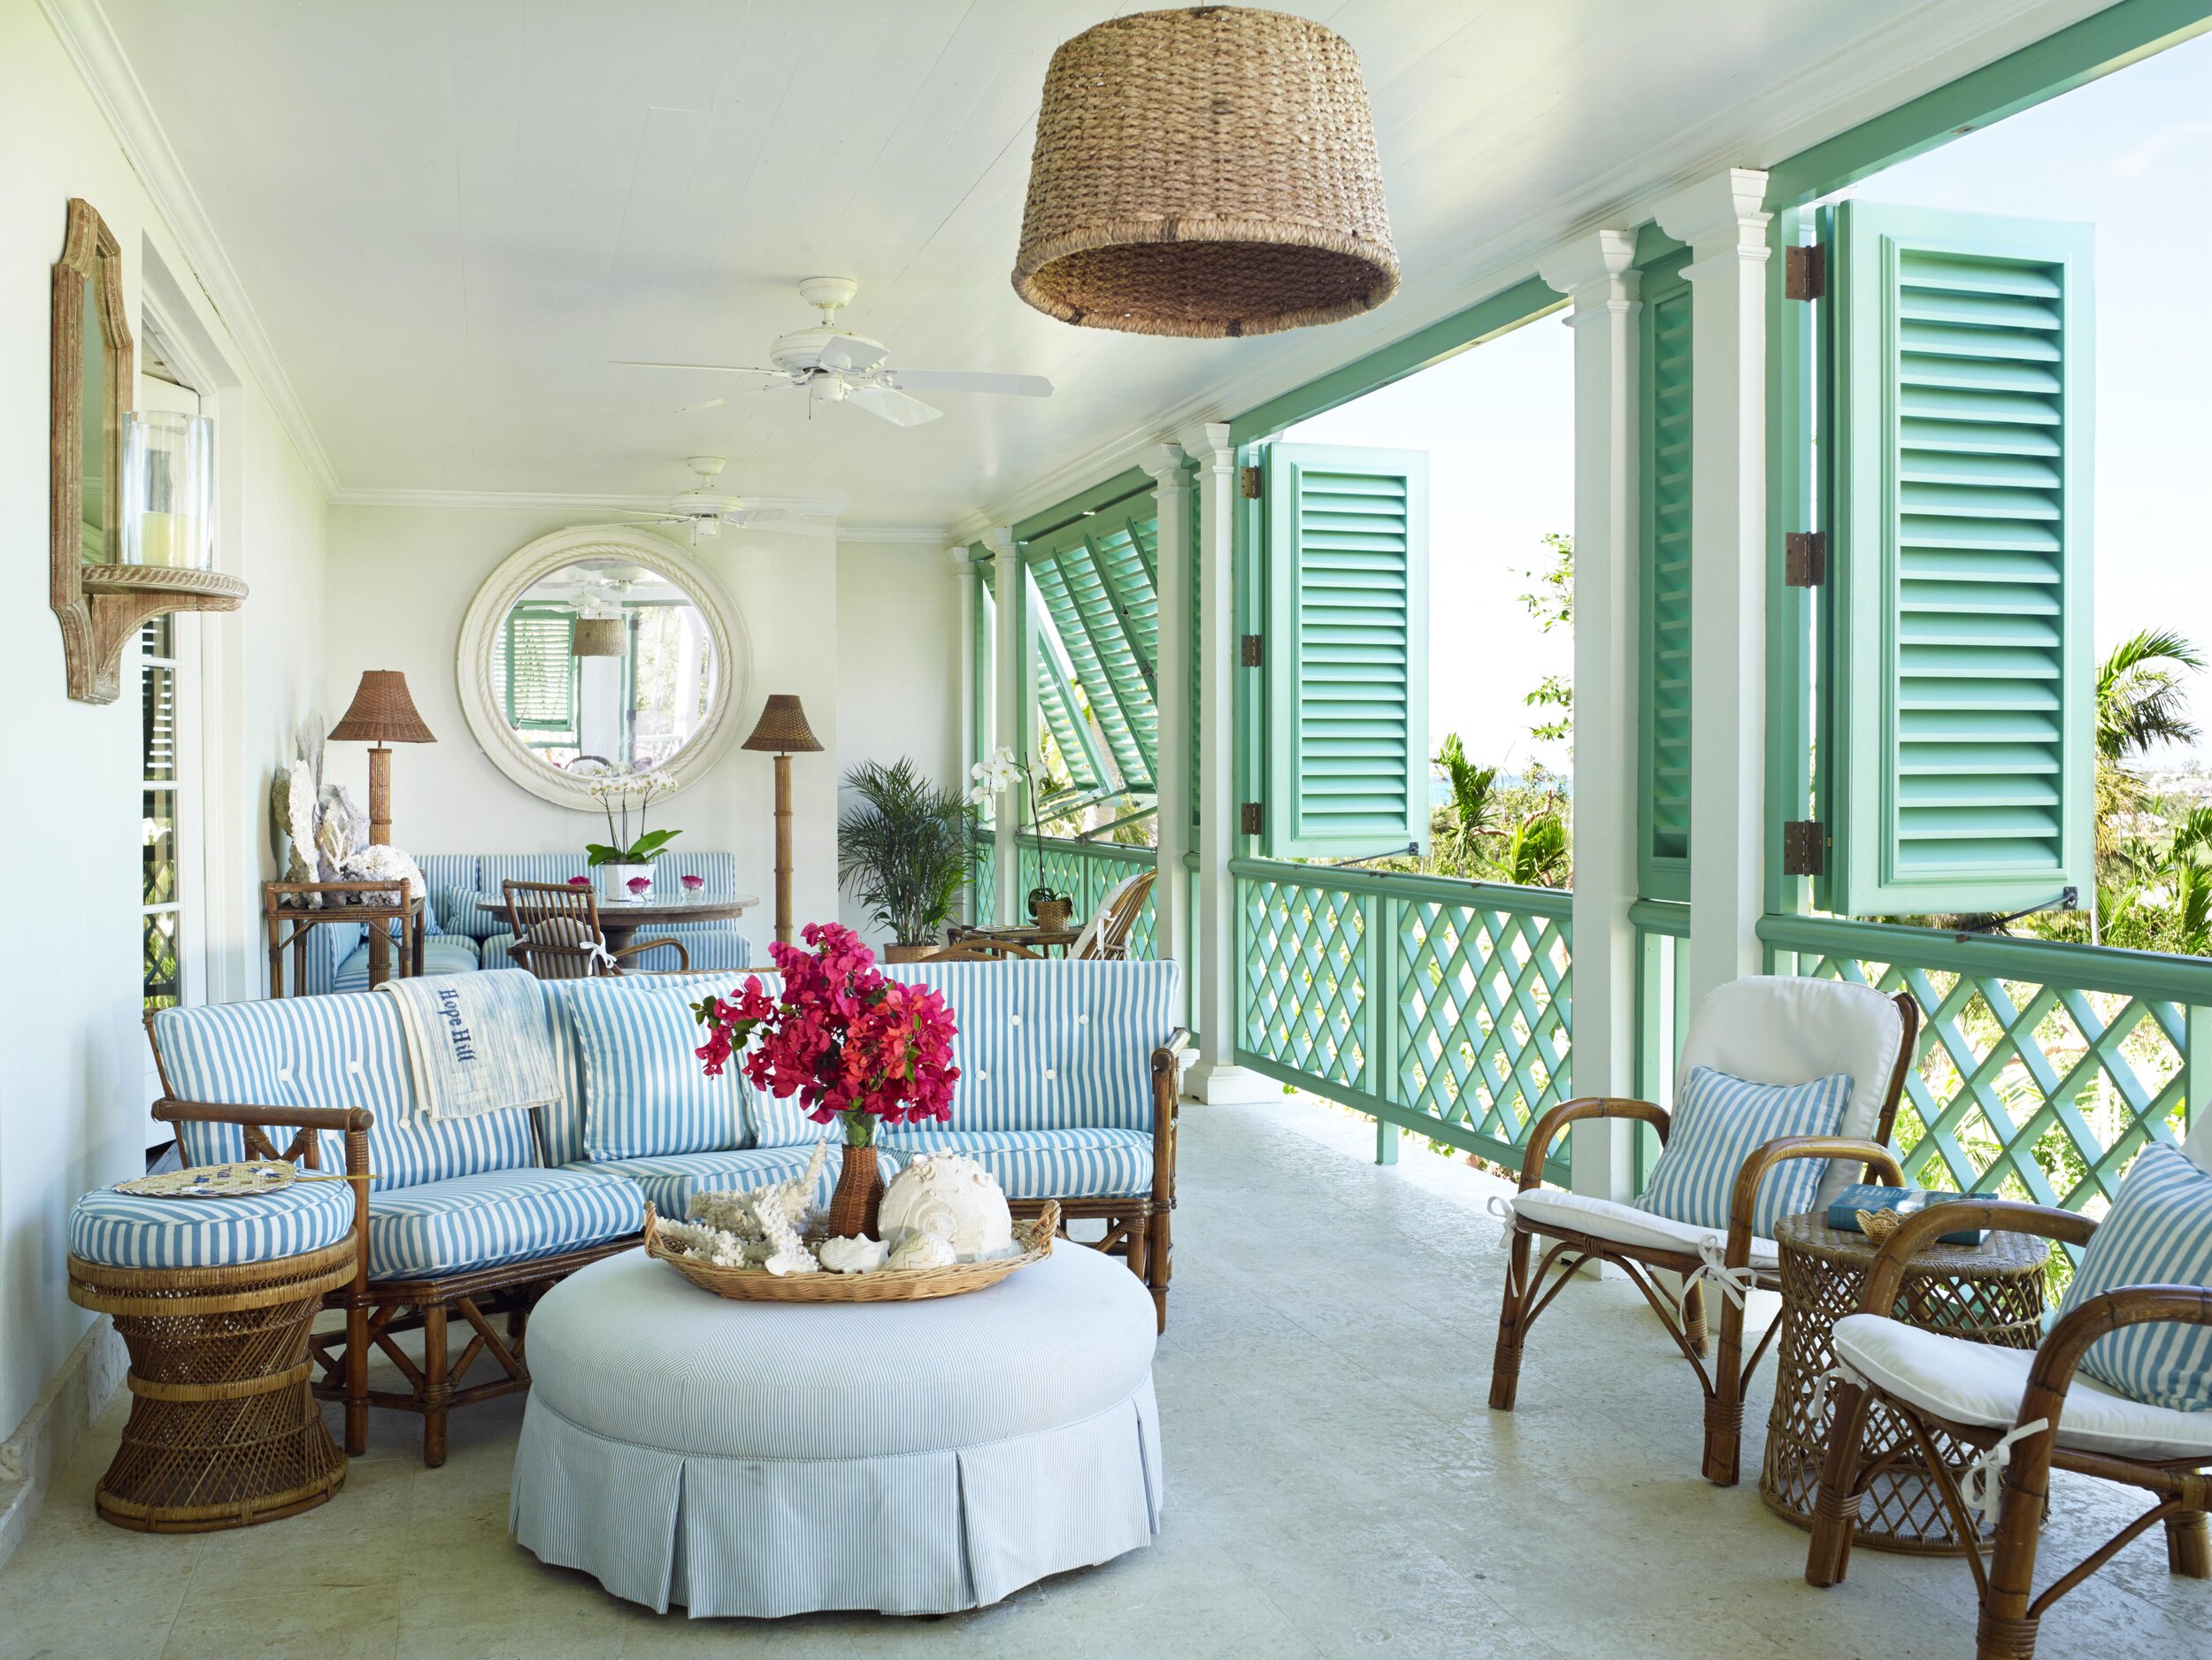 Décor Inspiration | At Home With: Amanda Lindroth, Lyford Cay, Bahamas